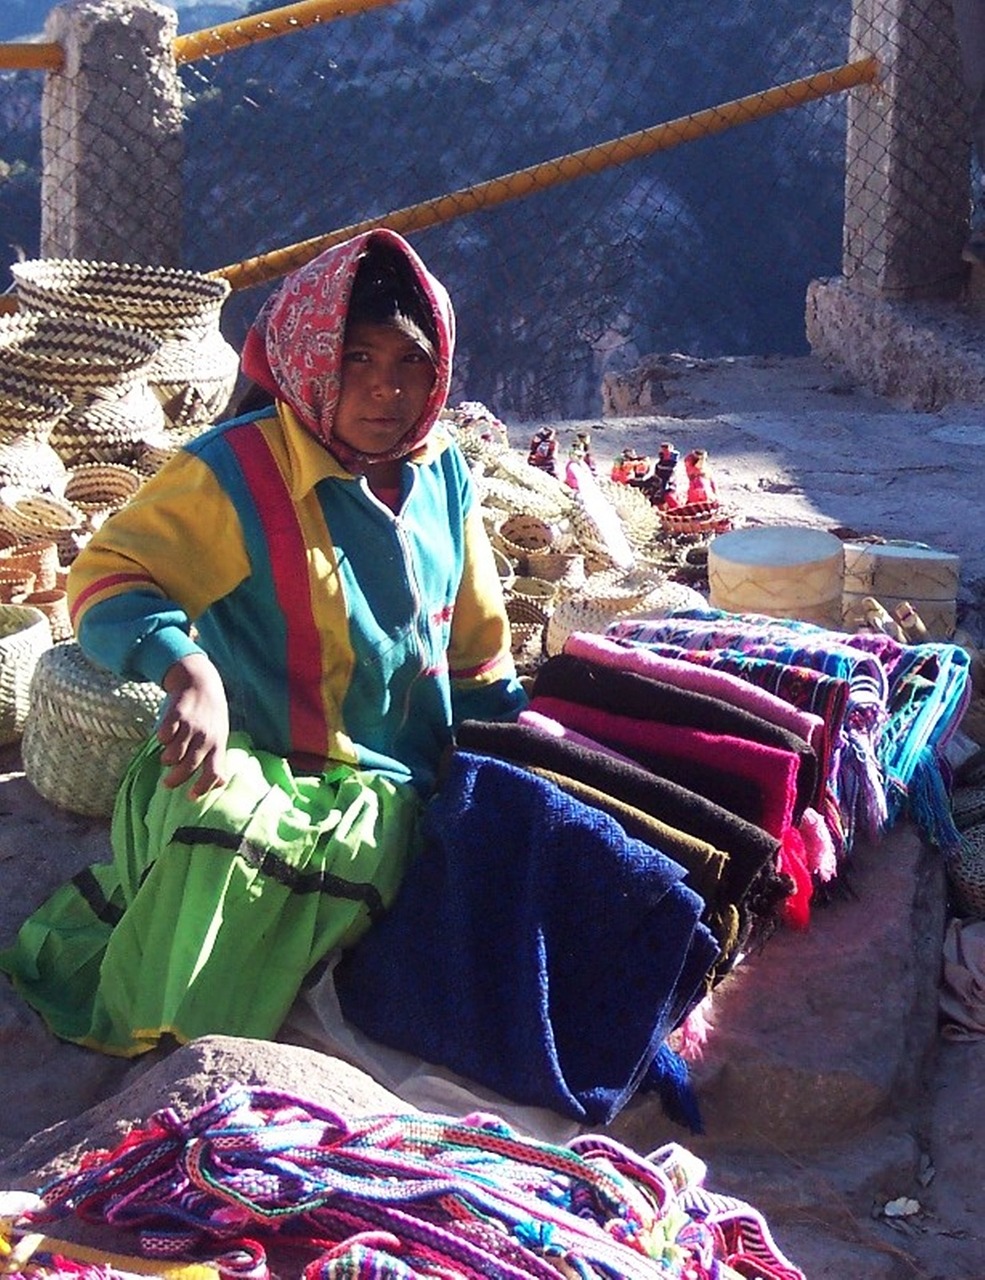 Ethnic Groups Indians Tarahumara Mexico Mexican Free Image From Needpix Com